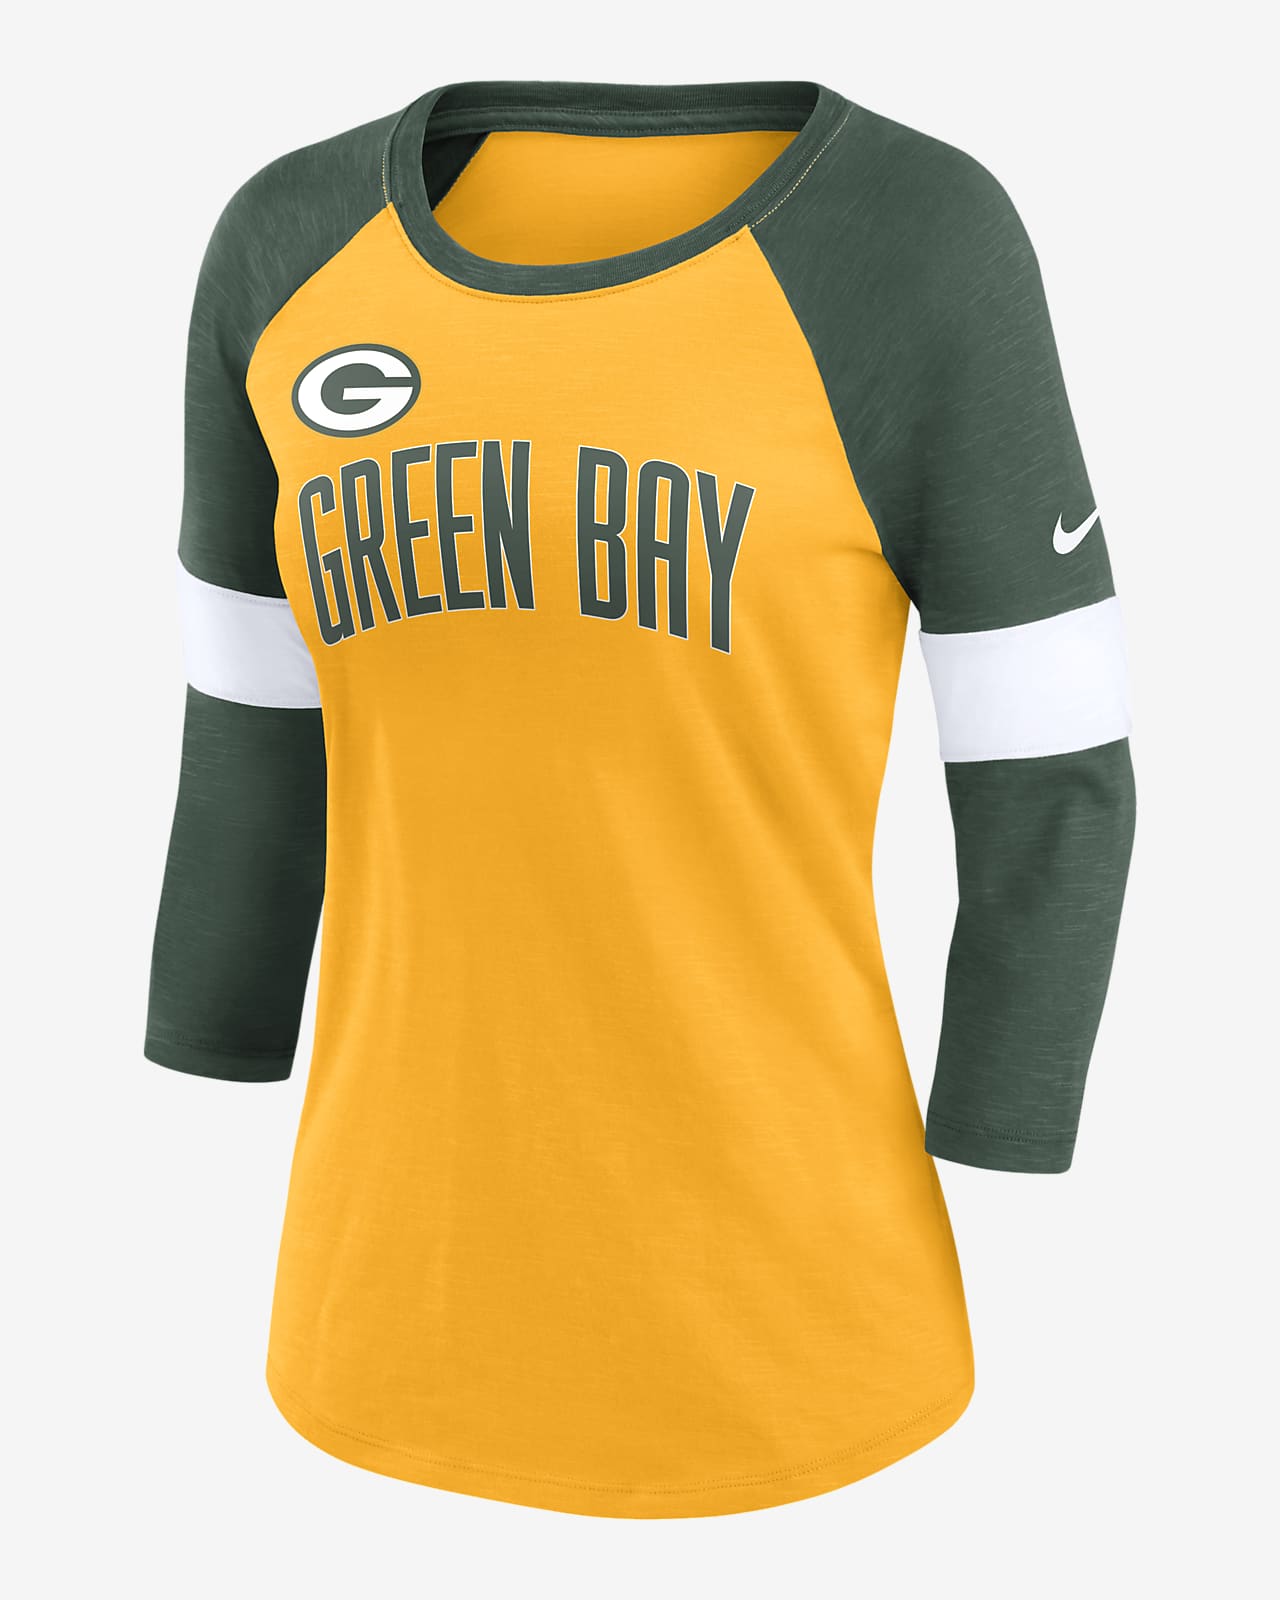 Women's Nike Green Bay Packers Heather Gold/Heather Football Pride Raglan 3/4-Sleeve T-Shirt Size: Small